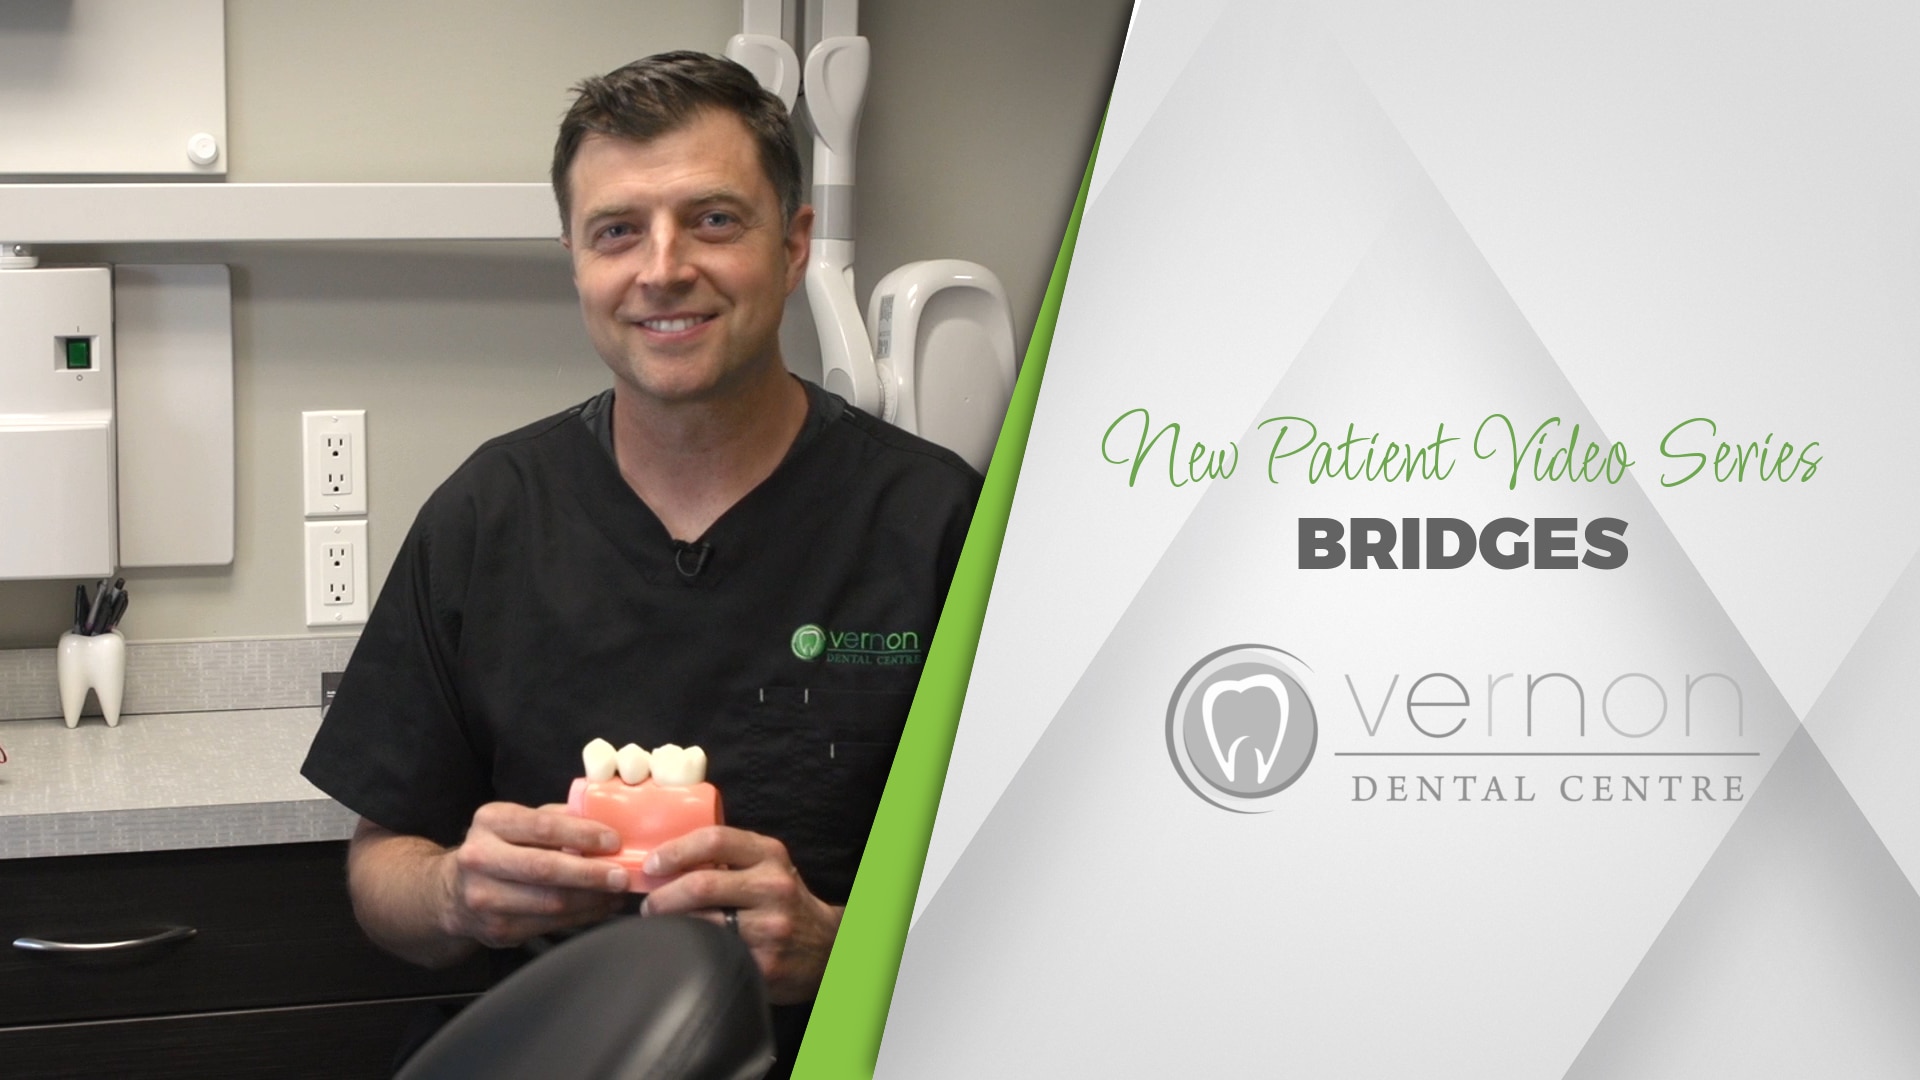 Dr. Anthony Berdan from Vernon Dental Centre discusses bridges.